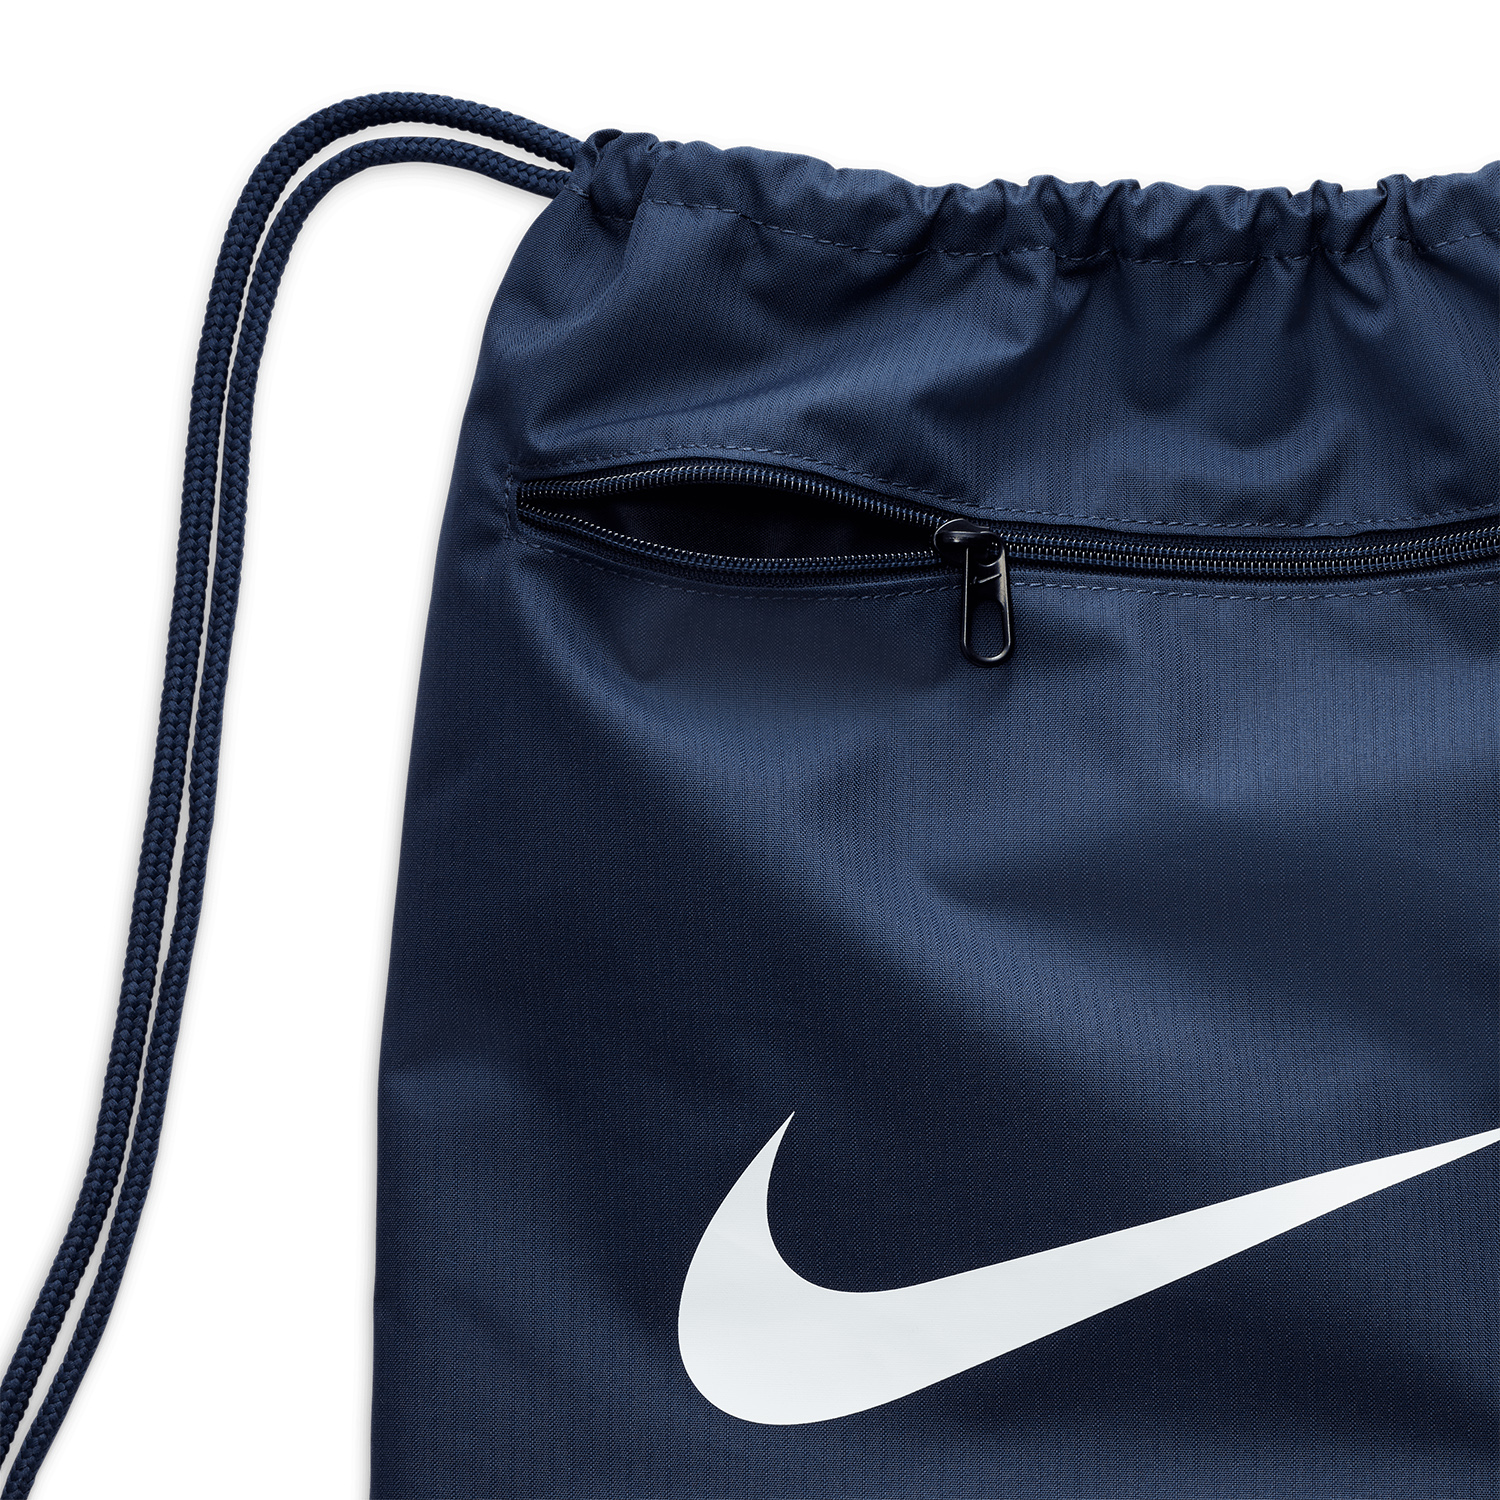 Nike Brasilia 9.5 Sportswear Sackpack - Midnight Navy/Black